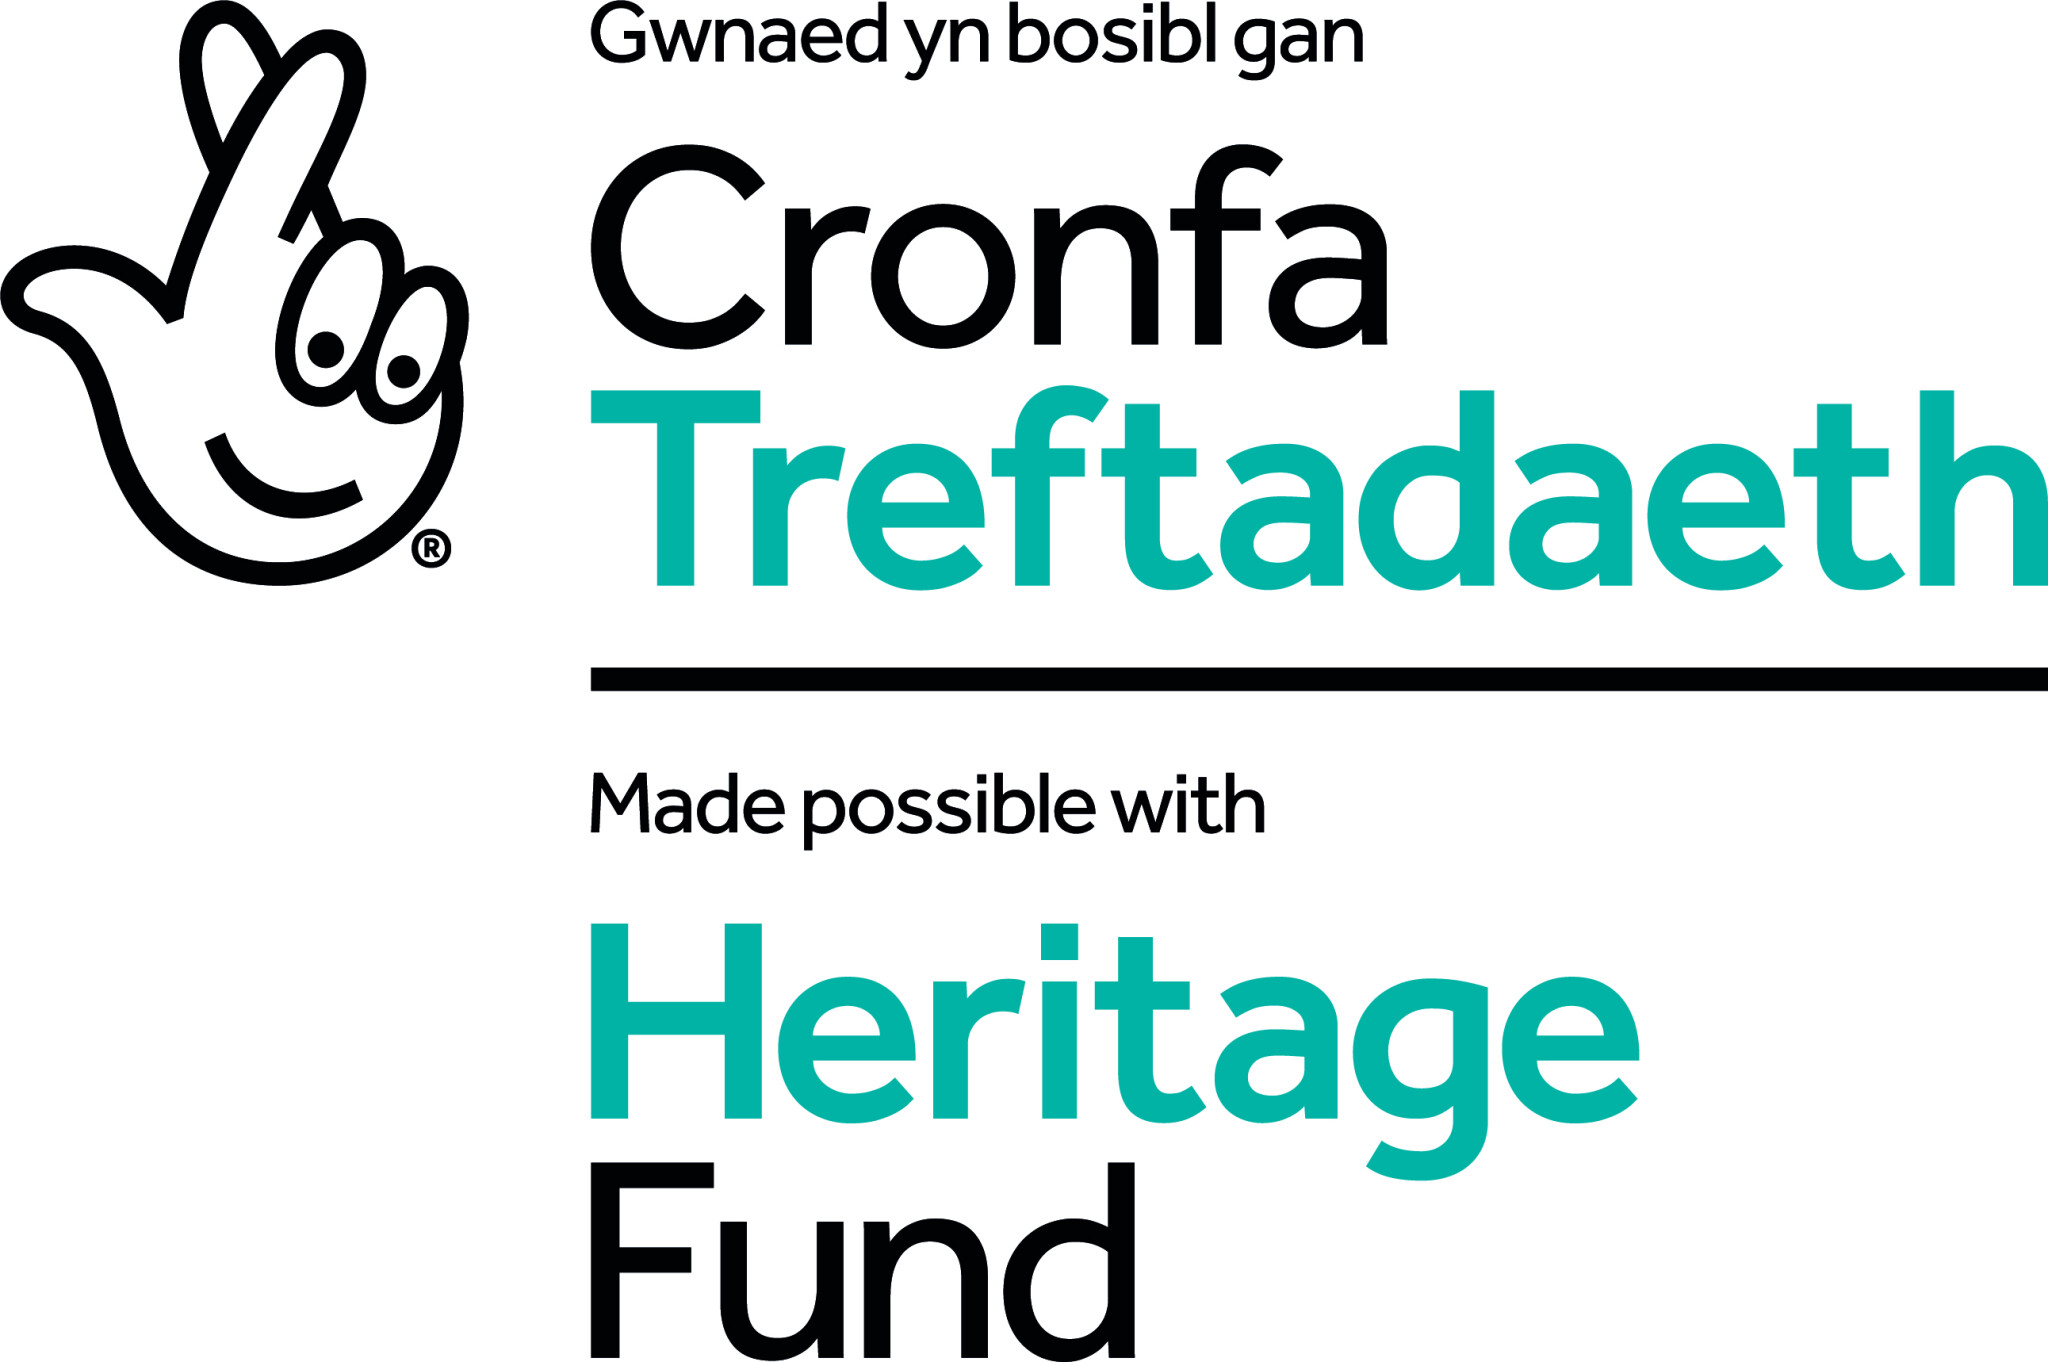 Welsh_Made_possible_logo_colour_JPEG.jpg